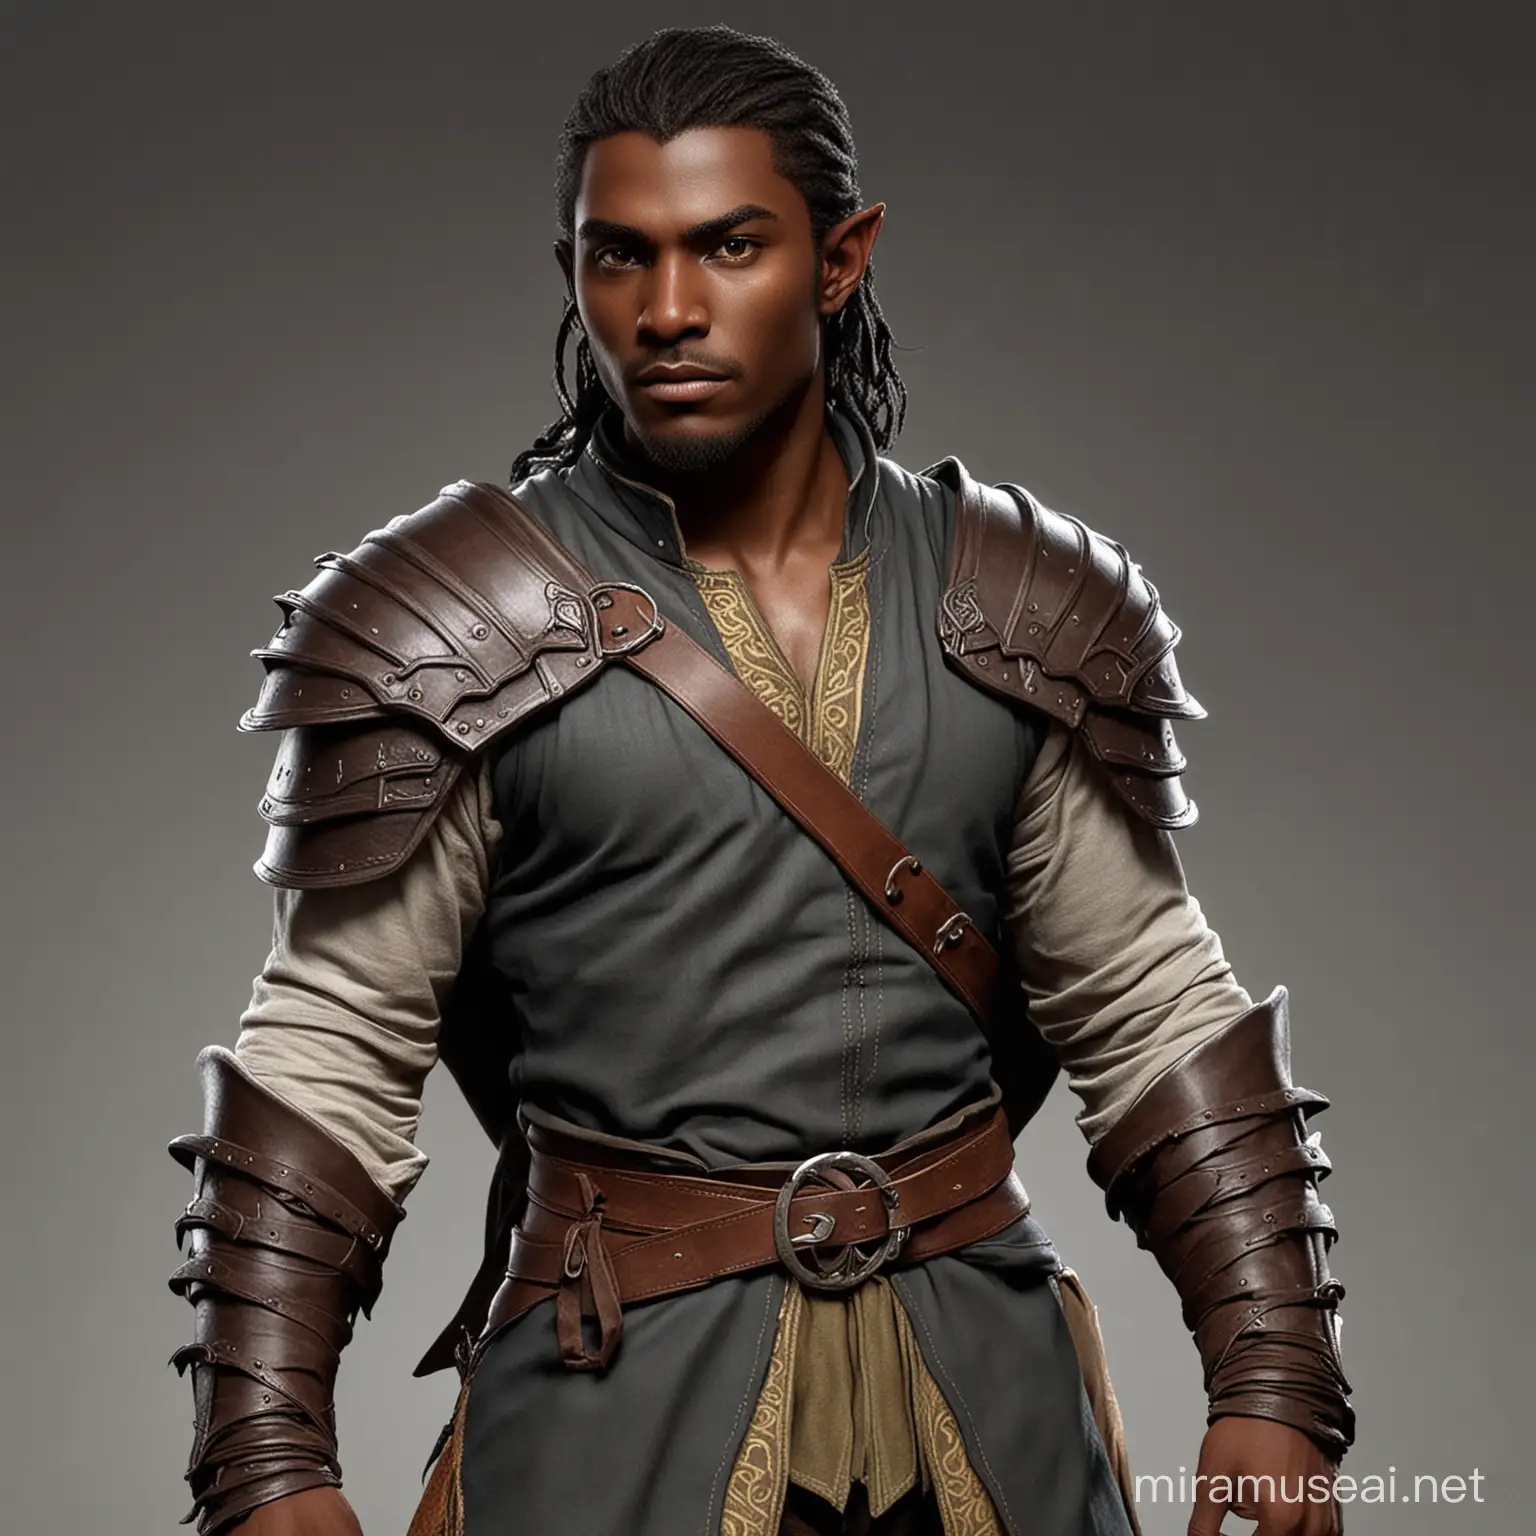 Half-elf, fighter, dark skinned, male.
